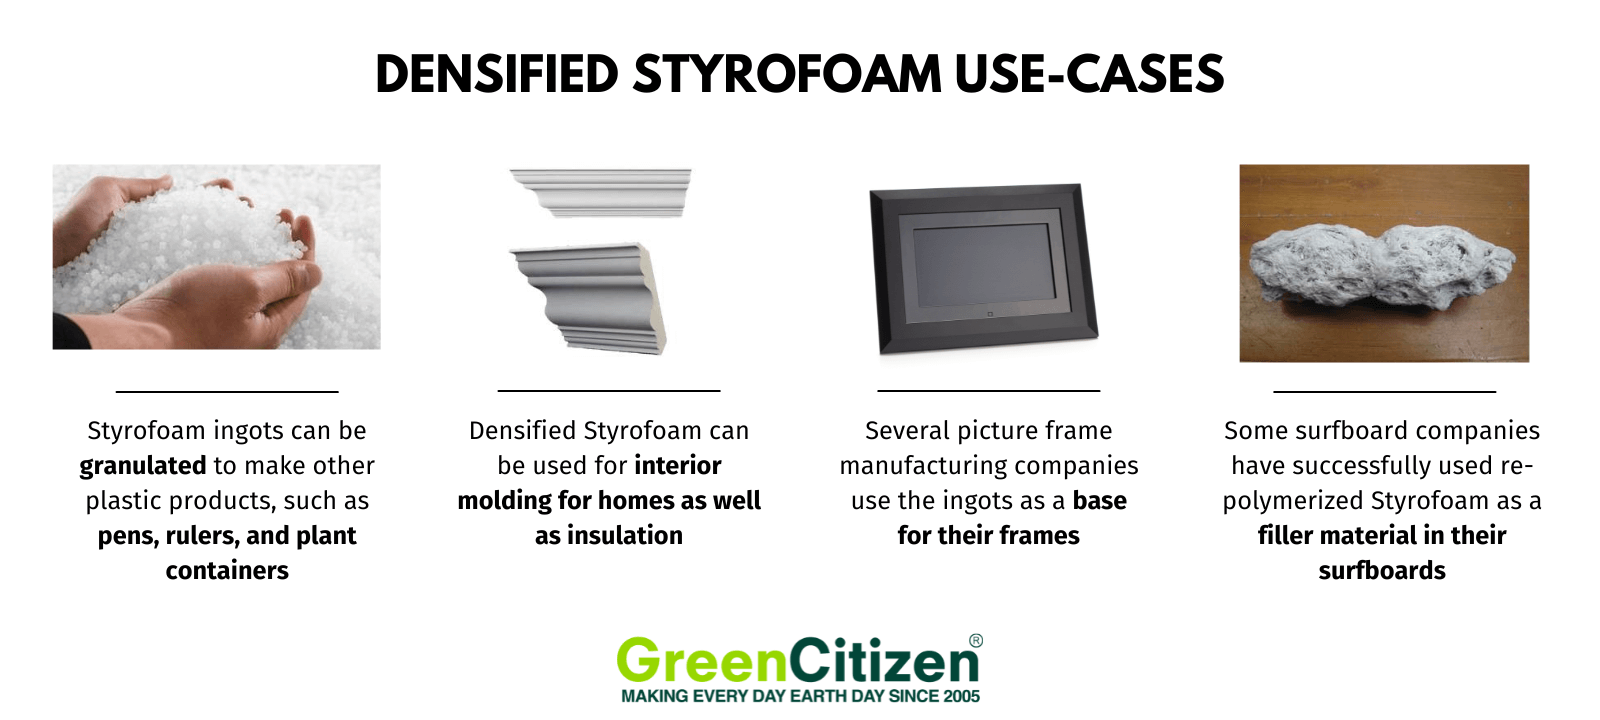 Densified Styrofoam use cases